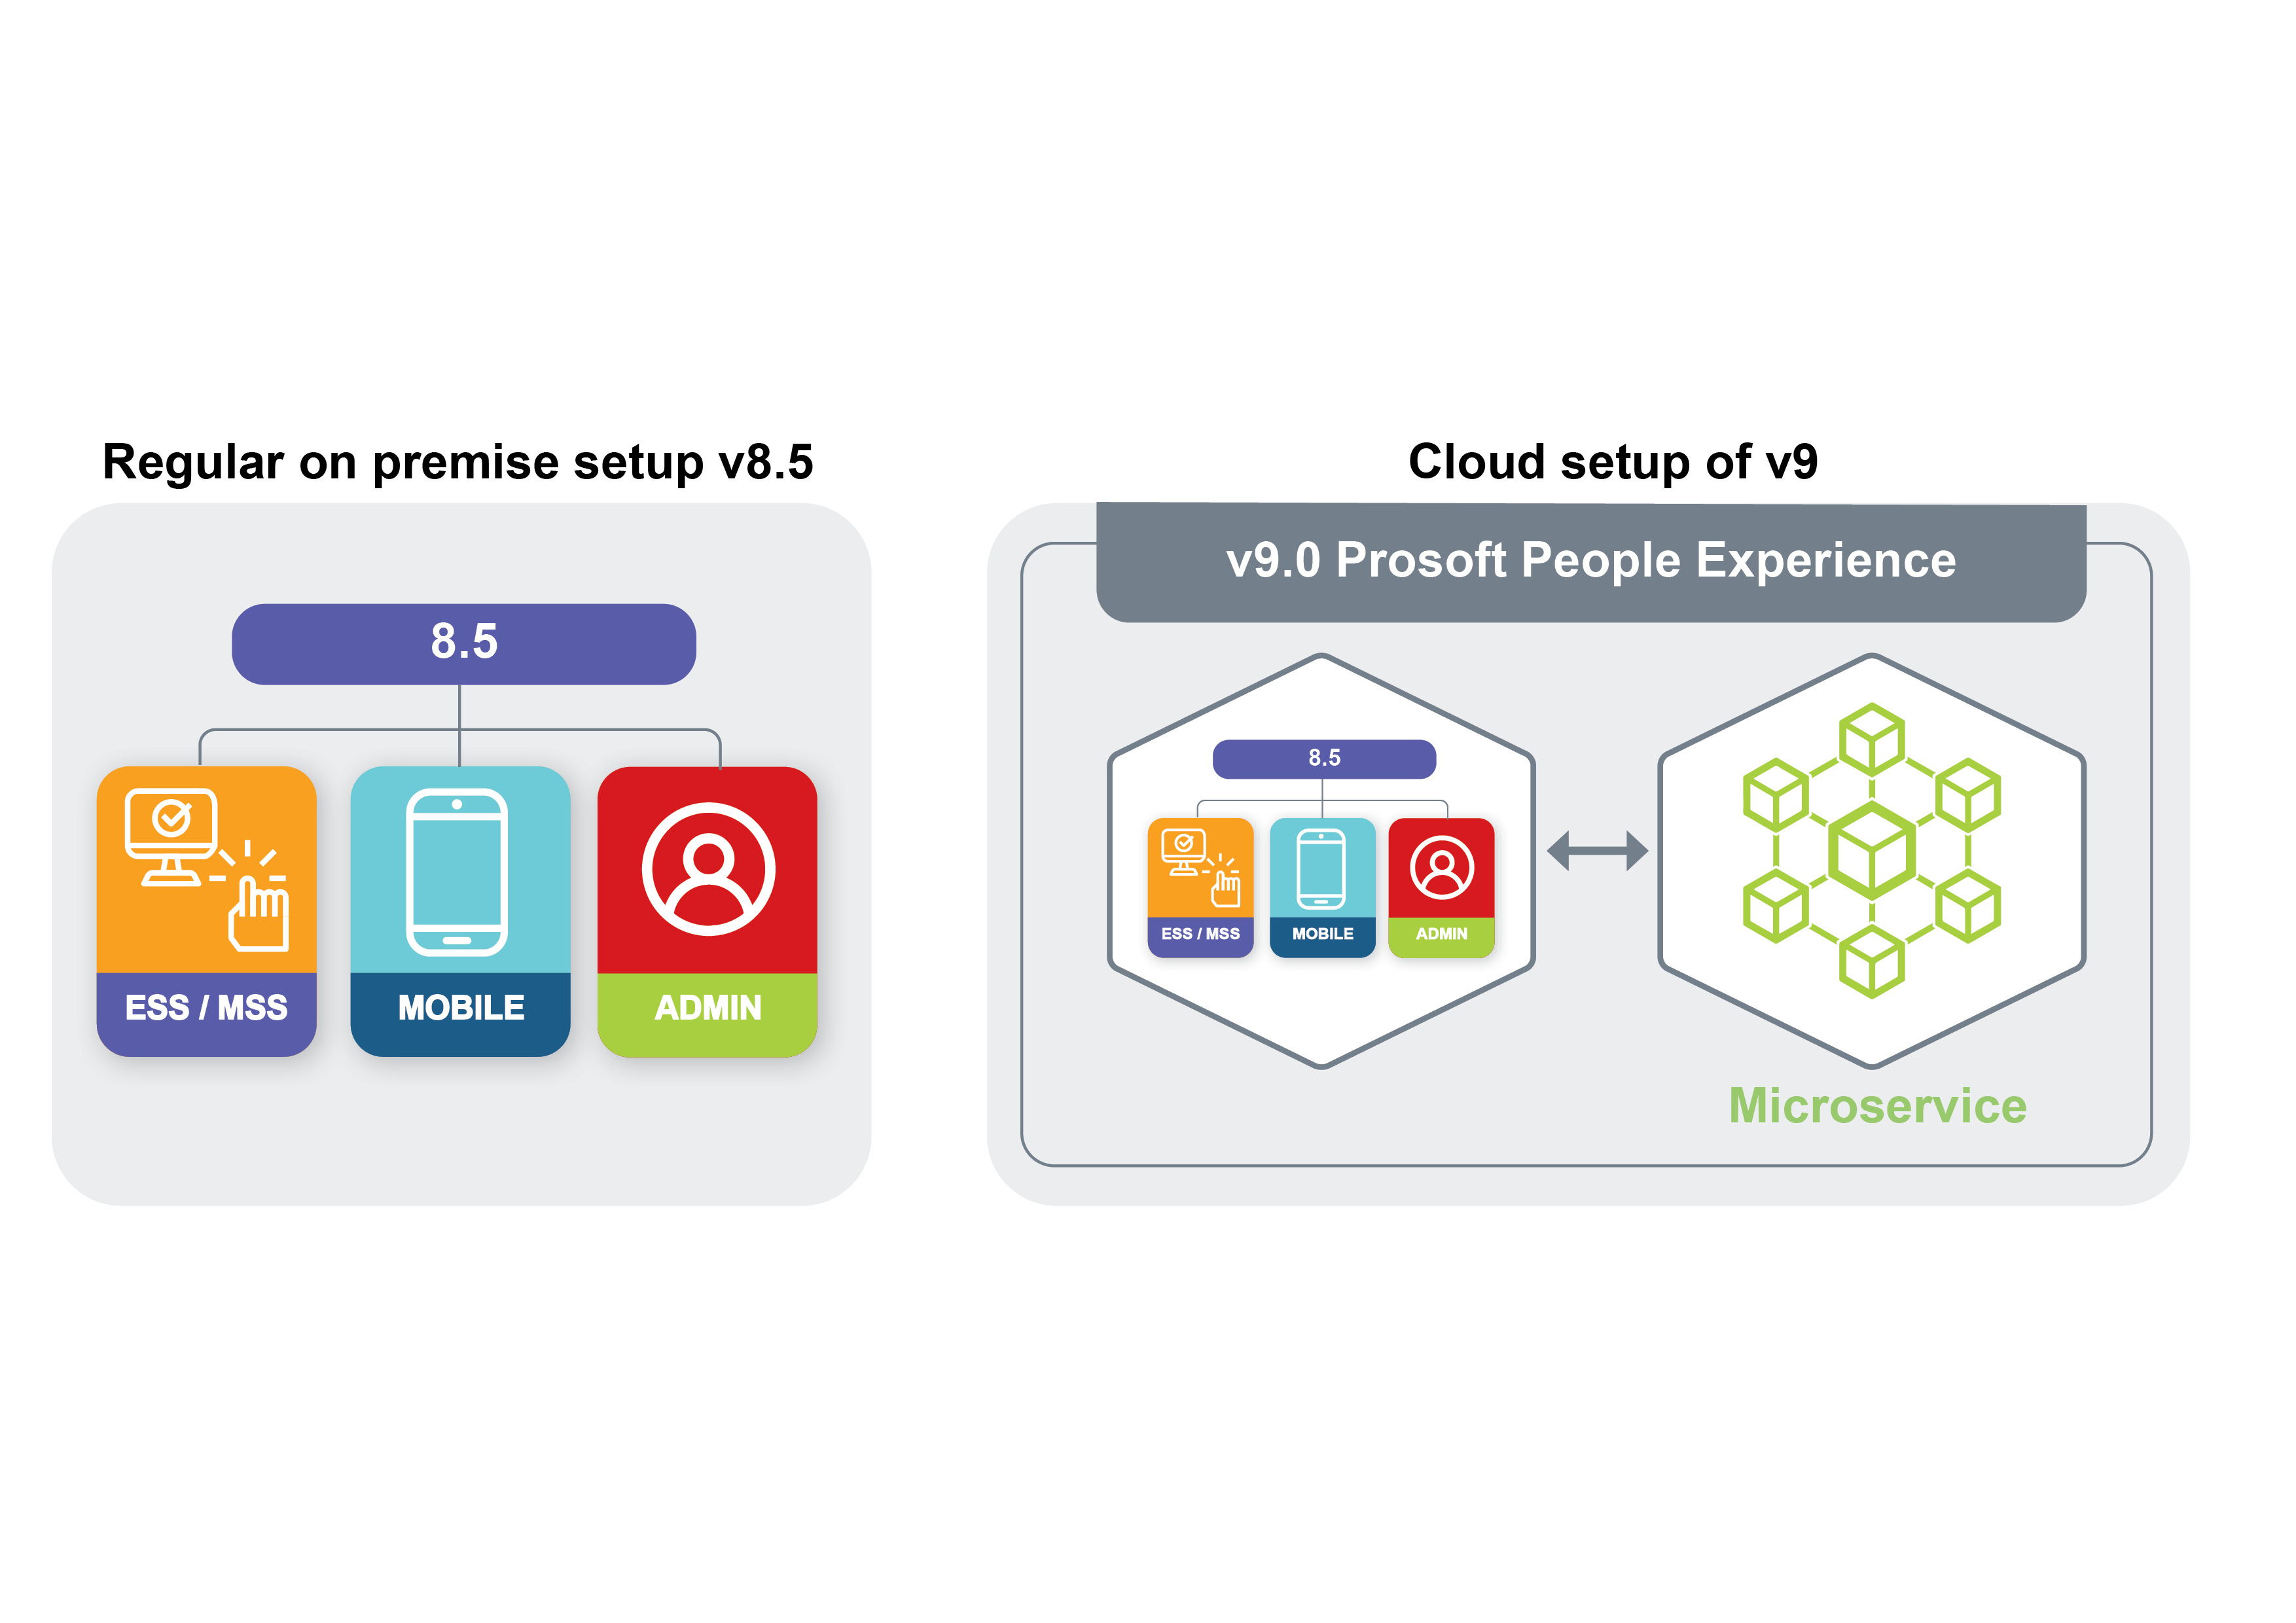 Cloud setup of v9 - Prosoft people experience